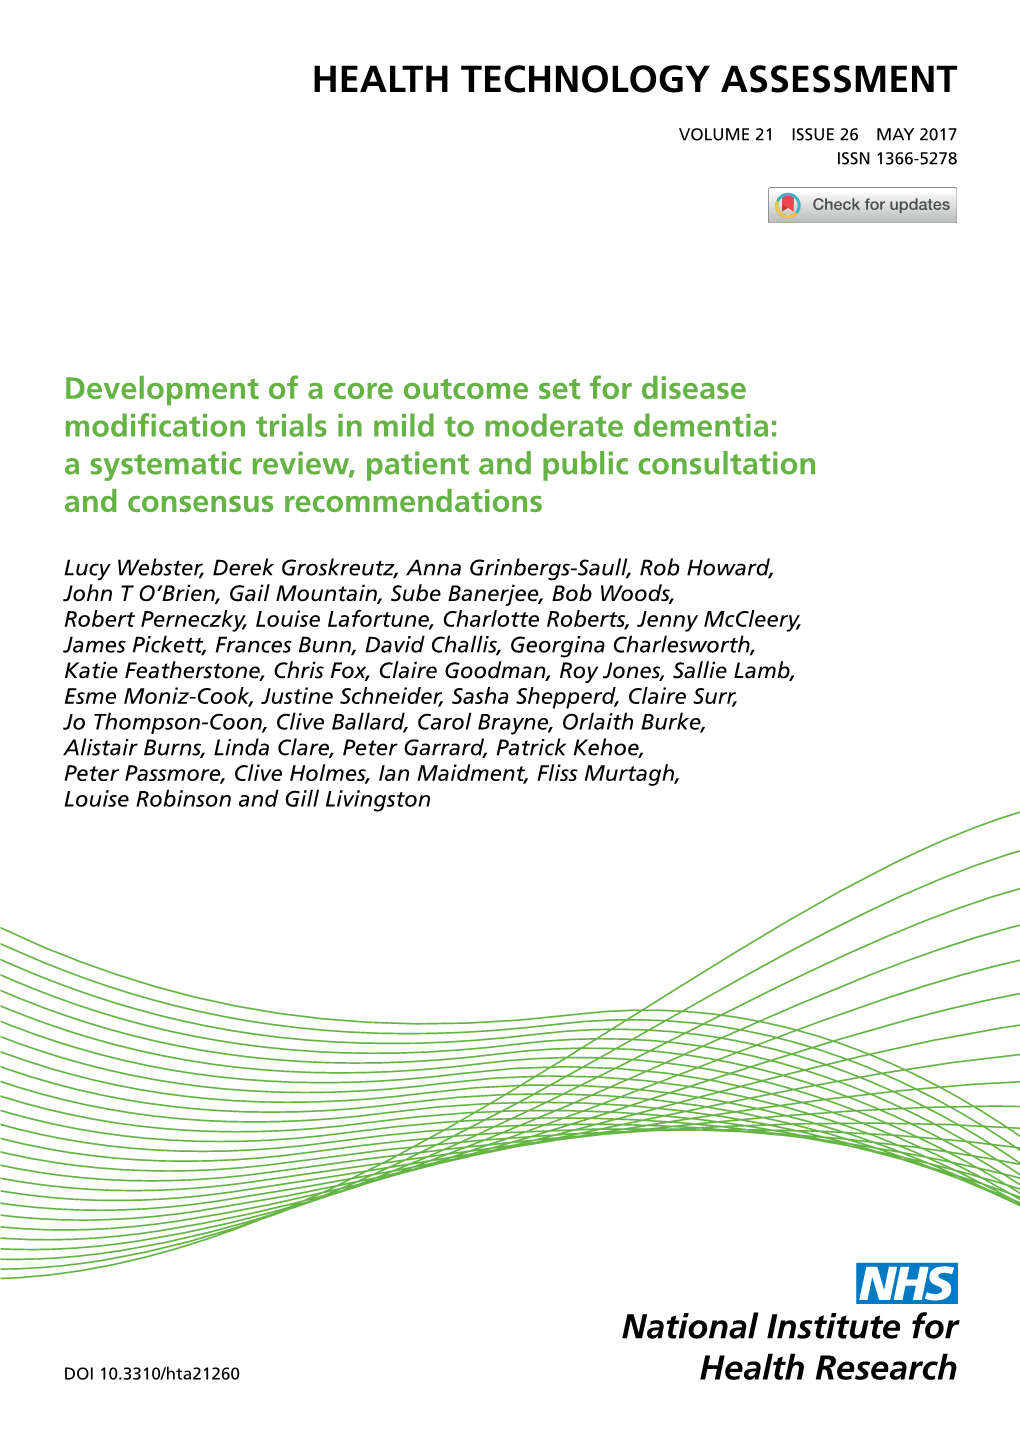 Development of a Core Outcome Set for Disease Modification Trials in Mild